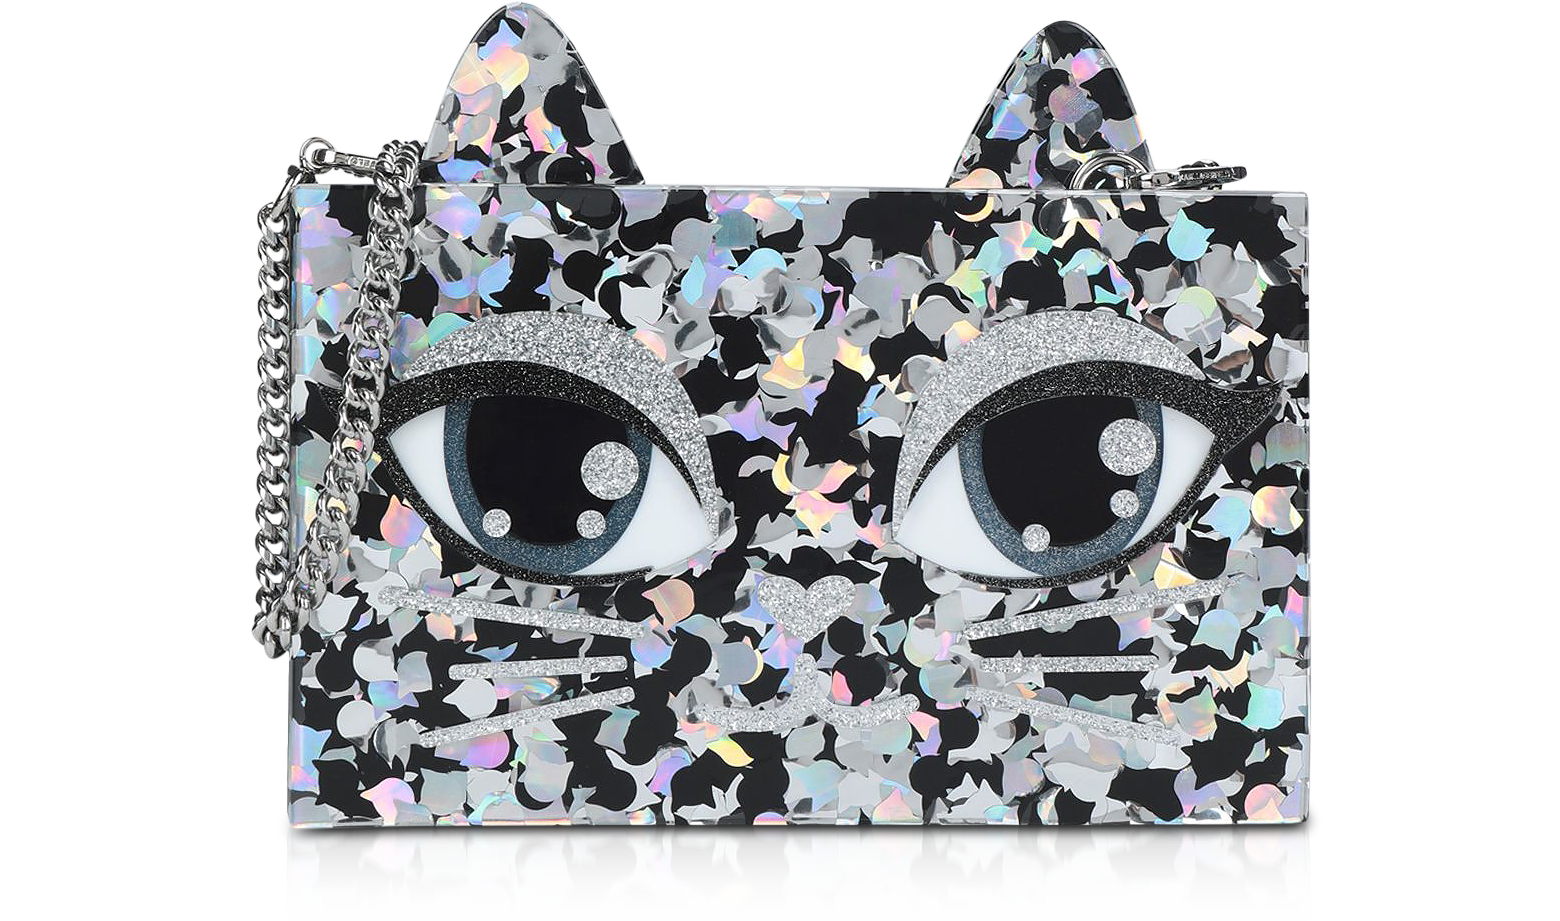 Karl Lagerfeld Glitter Shine Minaudiere Box Bag